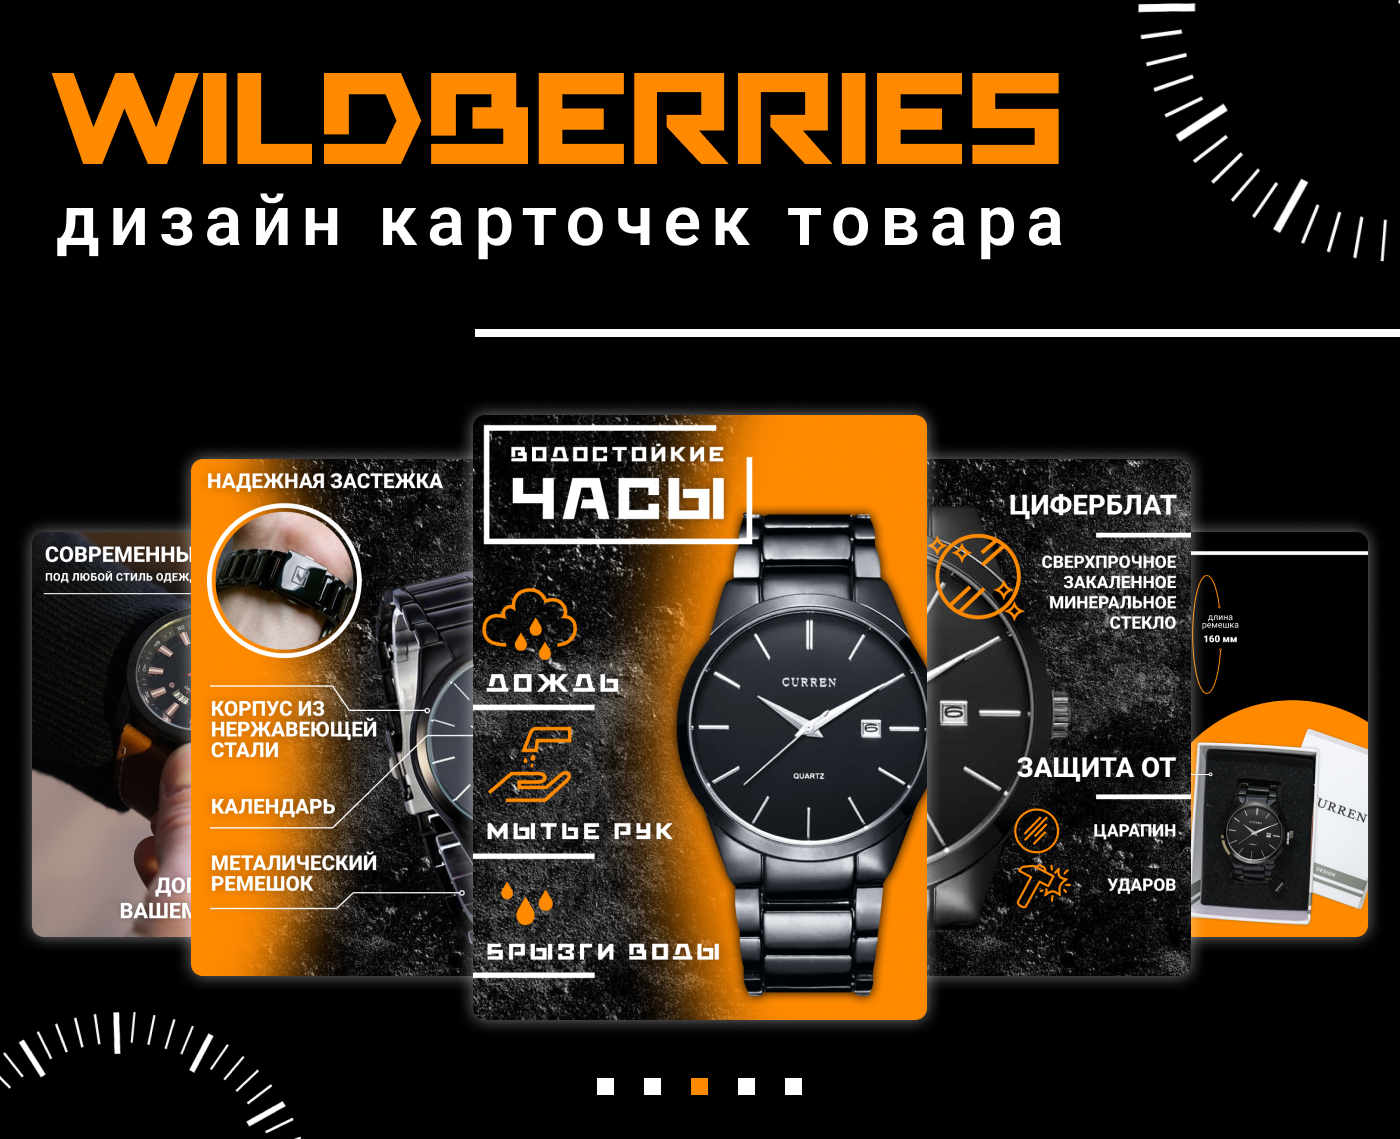 Маркетплейс часы. Инфографика Wildberries для карточек. Дизайн инфографики для Wildberries. Дизайн инфографика для маркетплейсов. Дизайн карточек товара для Wildberries.